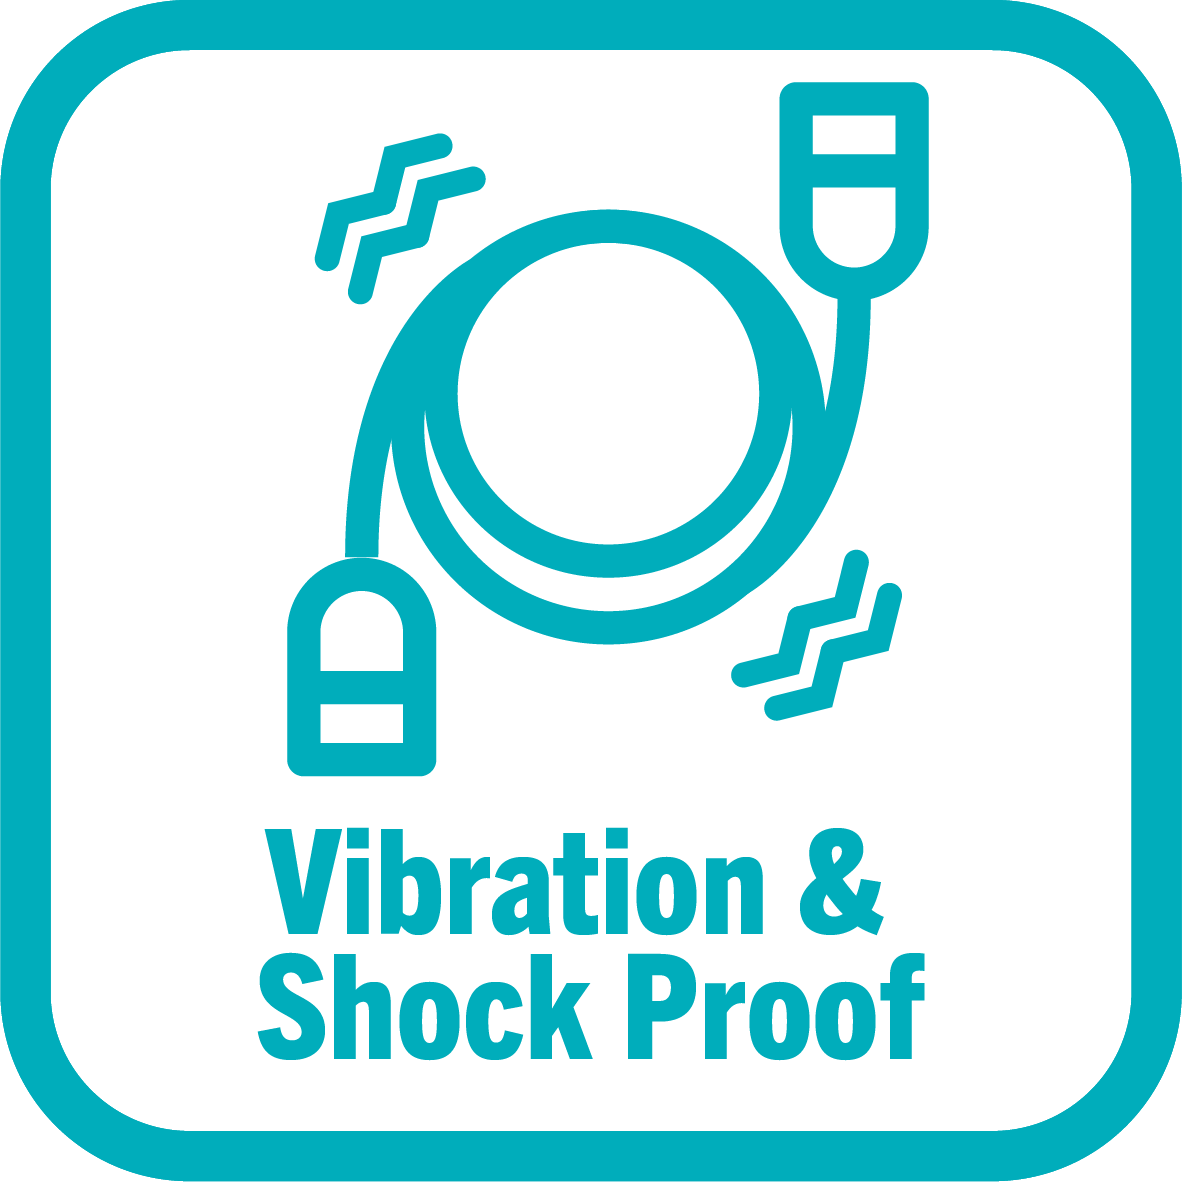 Vibration & Shock Proof